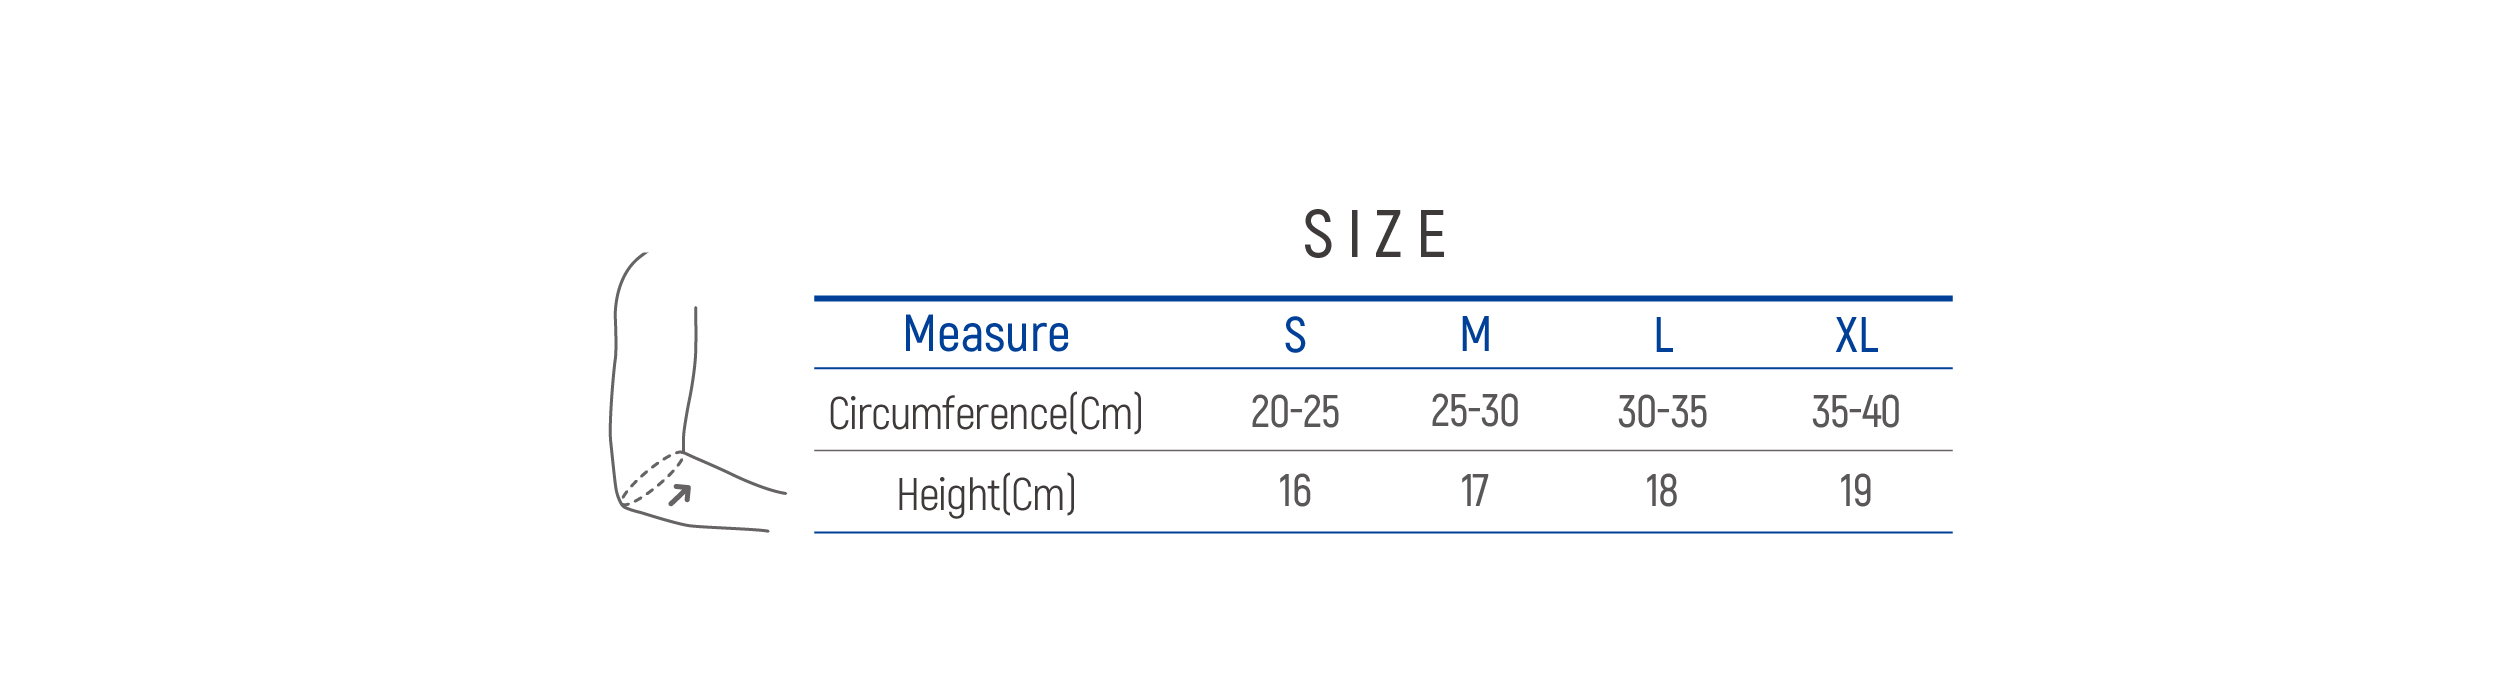 DR-E090 Size table image